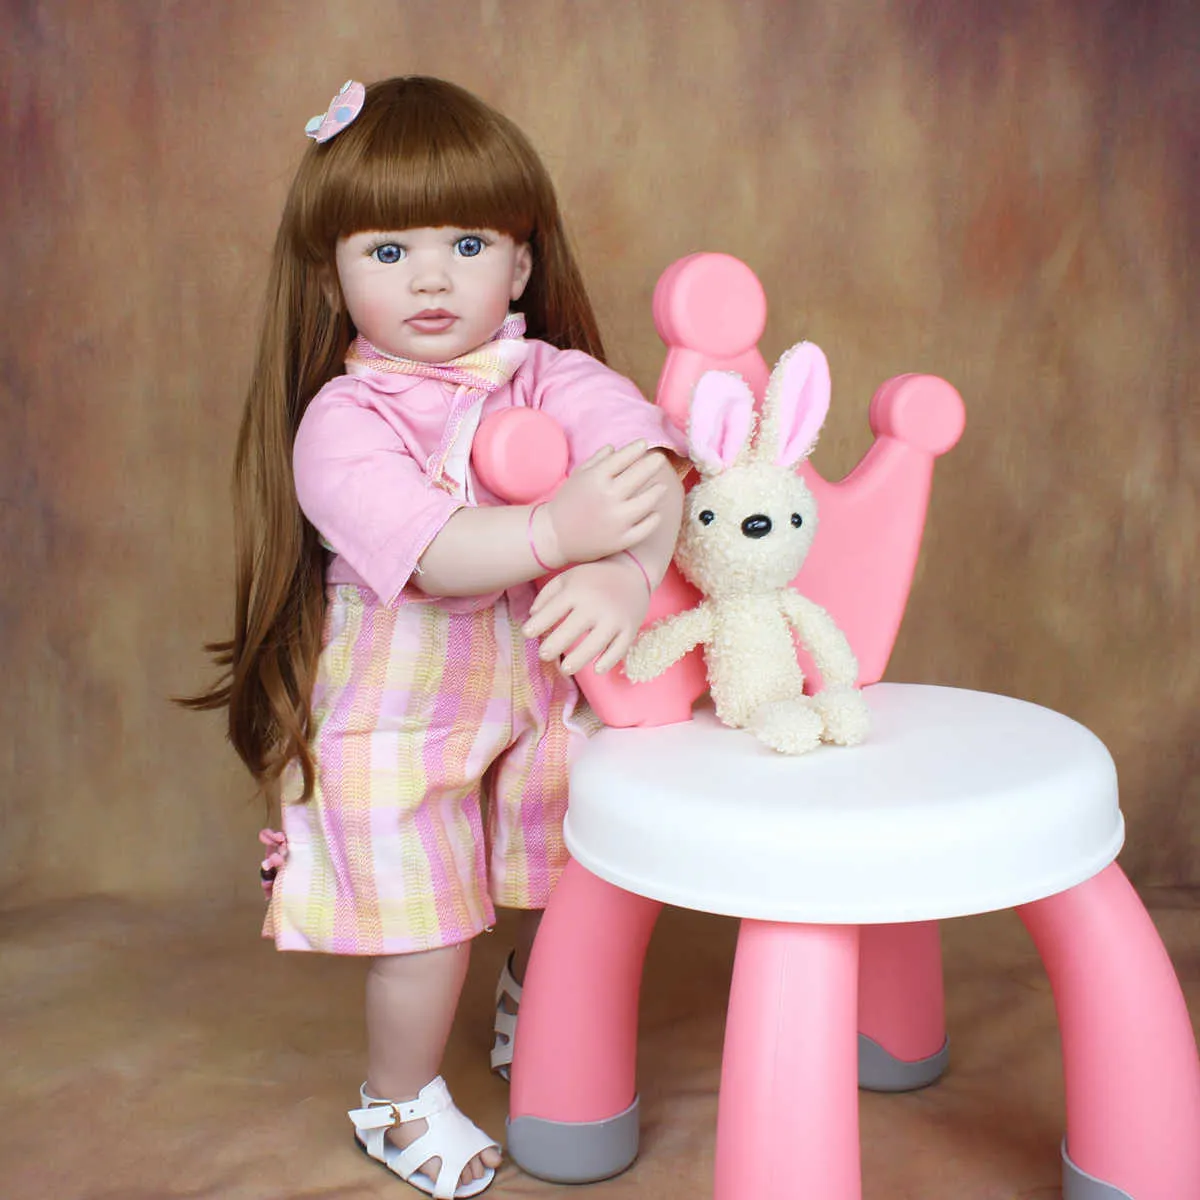 60 CM Silicone Reborn Toddler Doll Toy Realistico 24 pollici Vinile Capelli lunghi Princess Babies Alive Bebe Dress Up Girl Regalo di compleanno Q0910